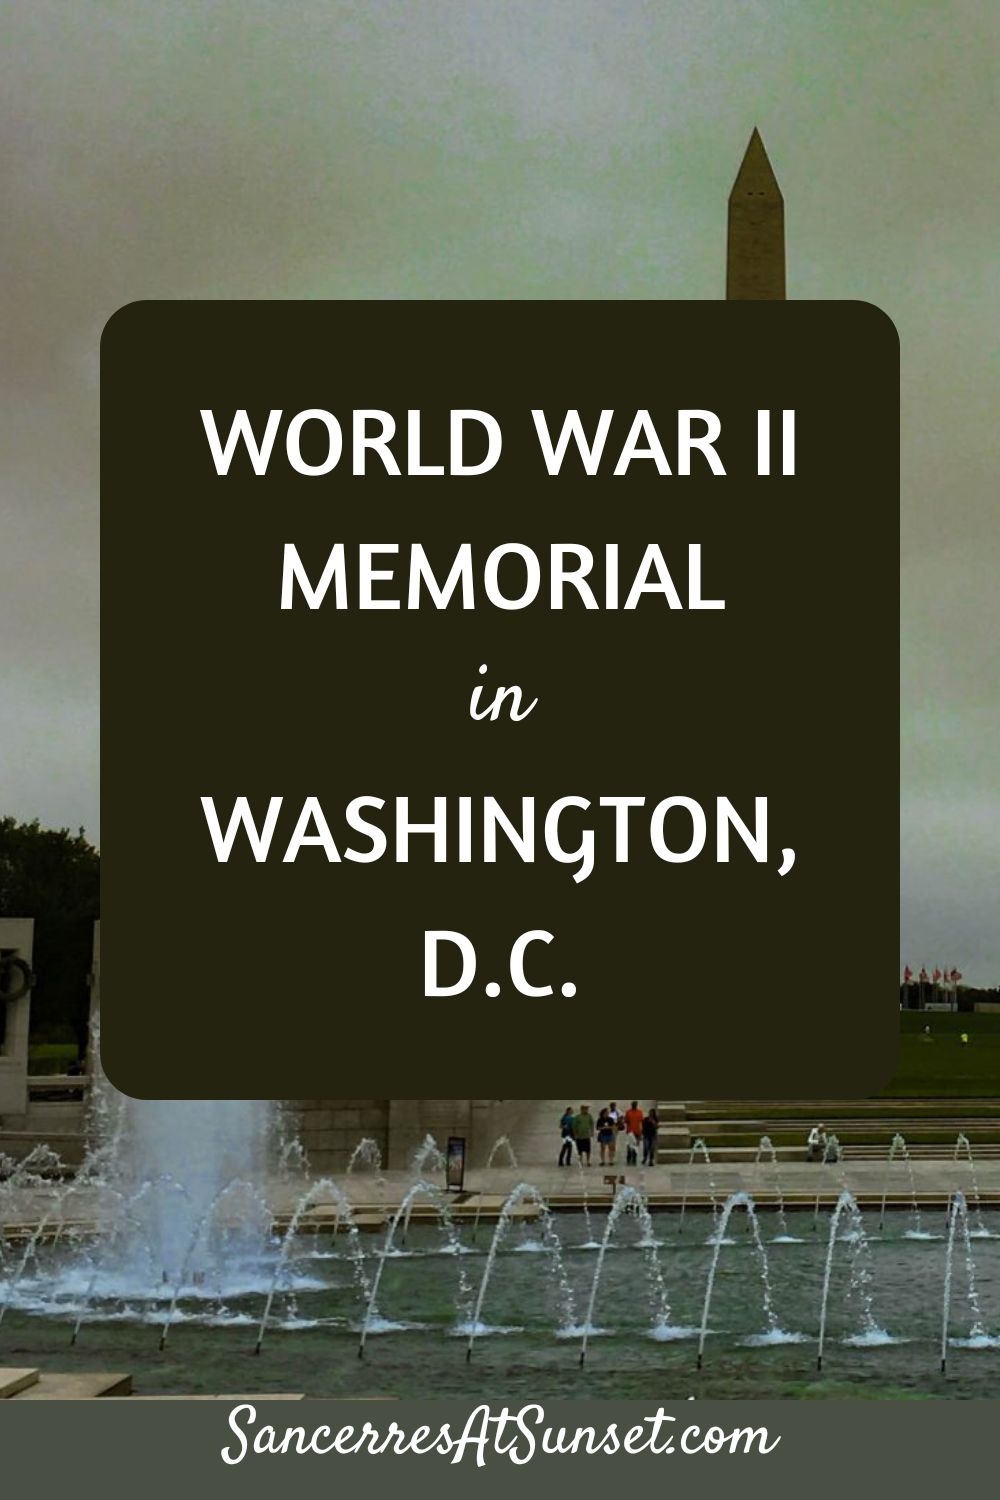 World War II Memorial in Washington, D.C.